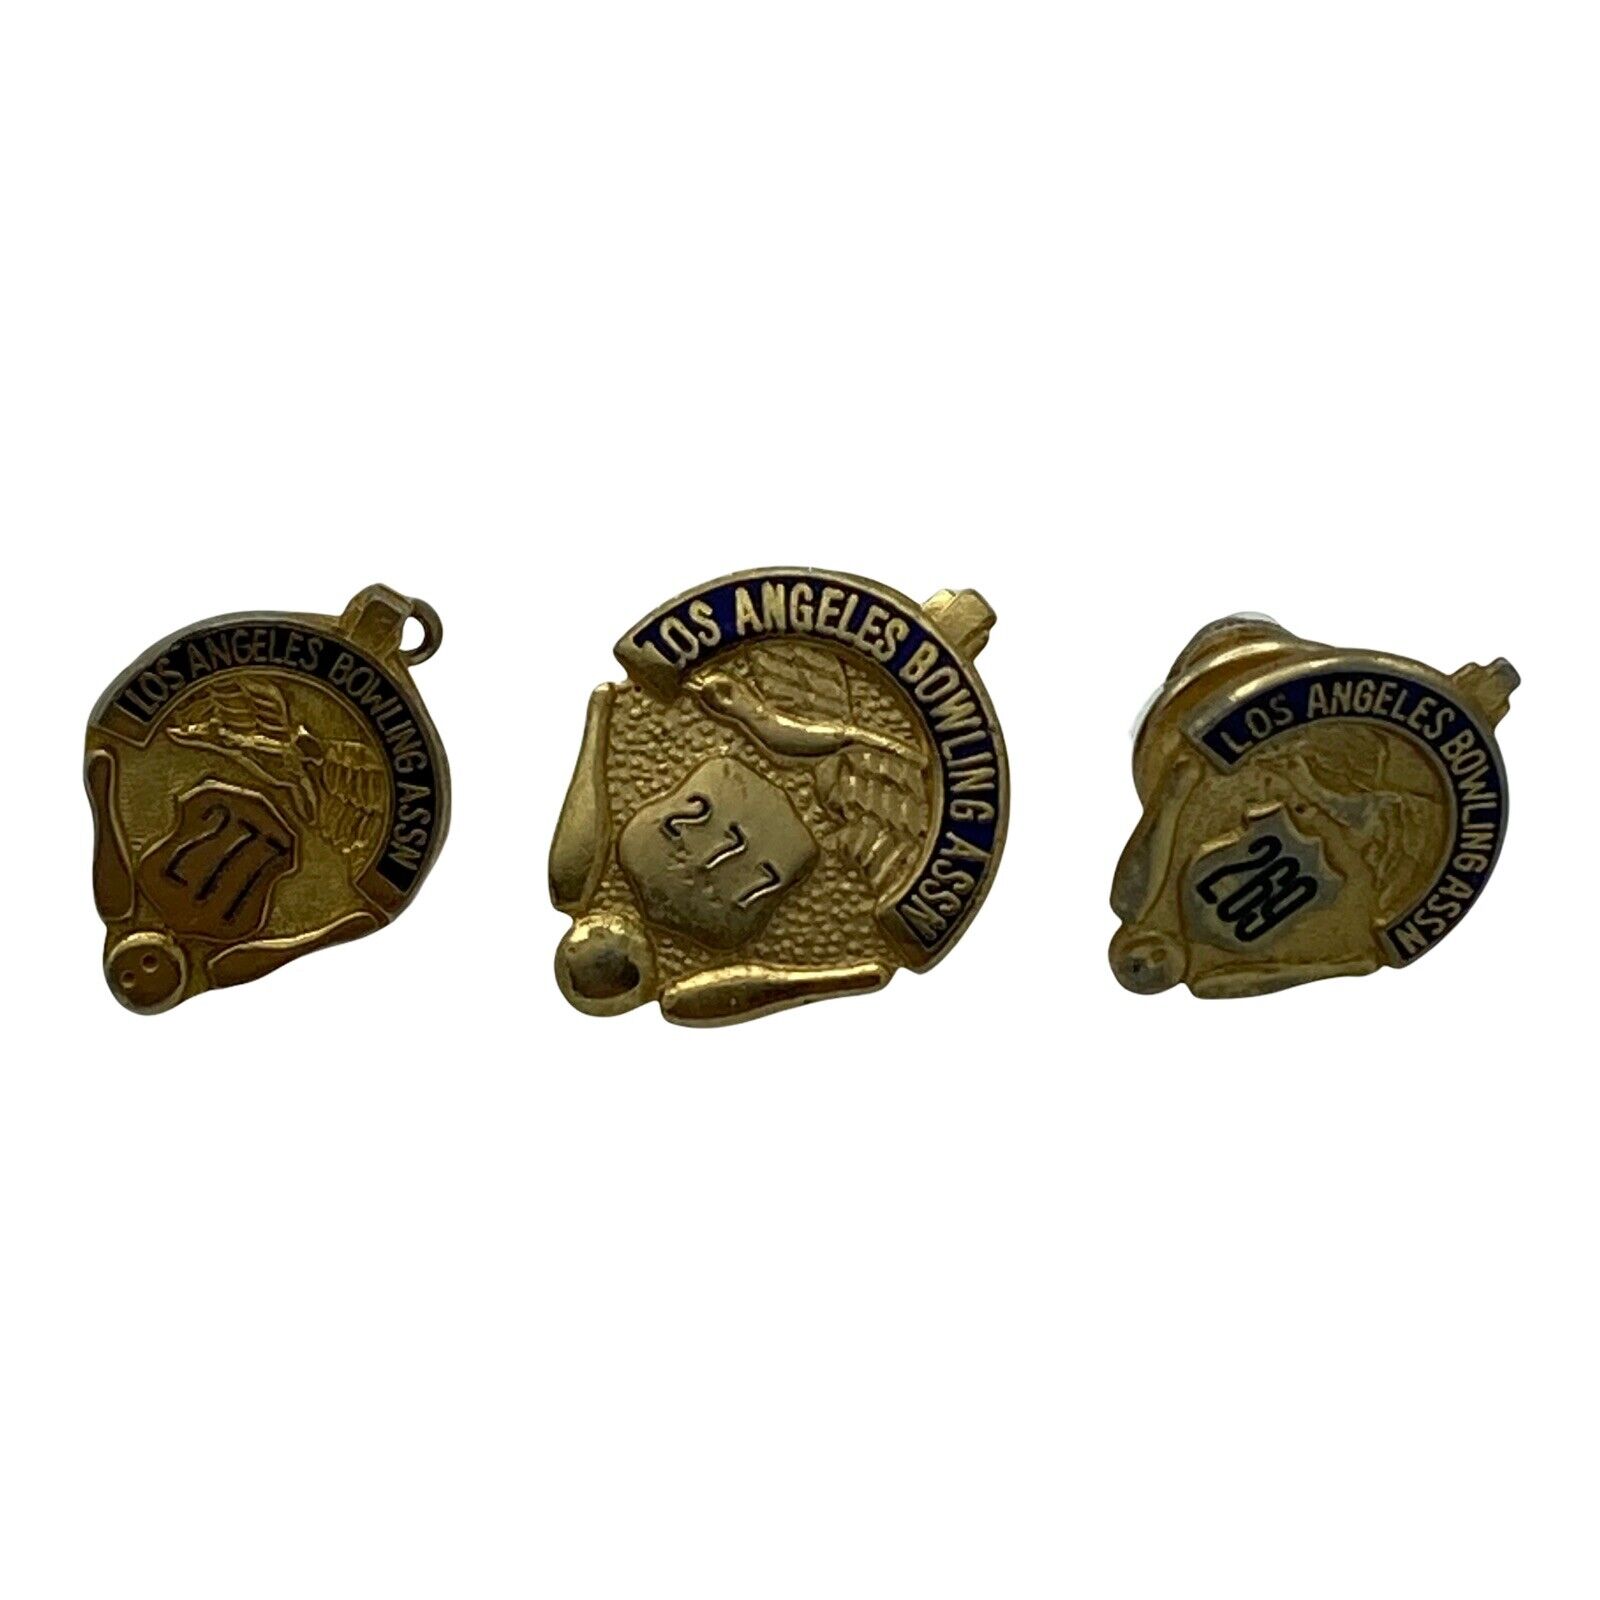 Los Angeles Bowling Association Pins 3 Vintage 